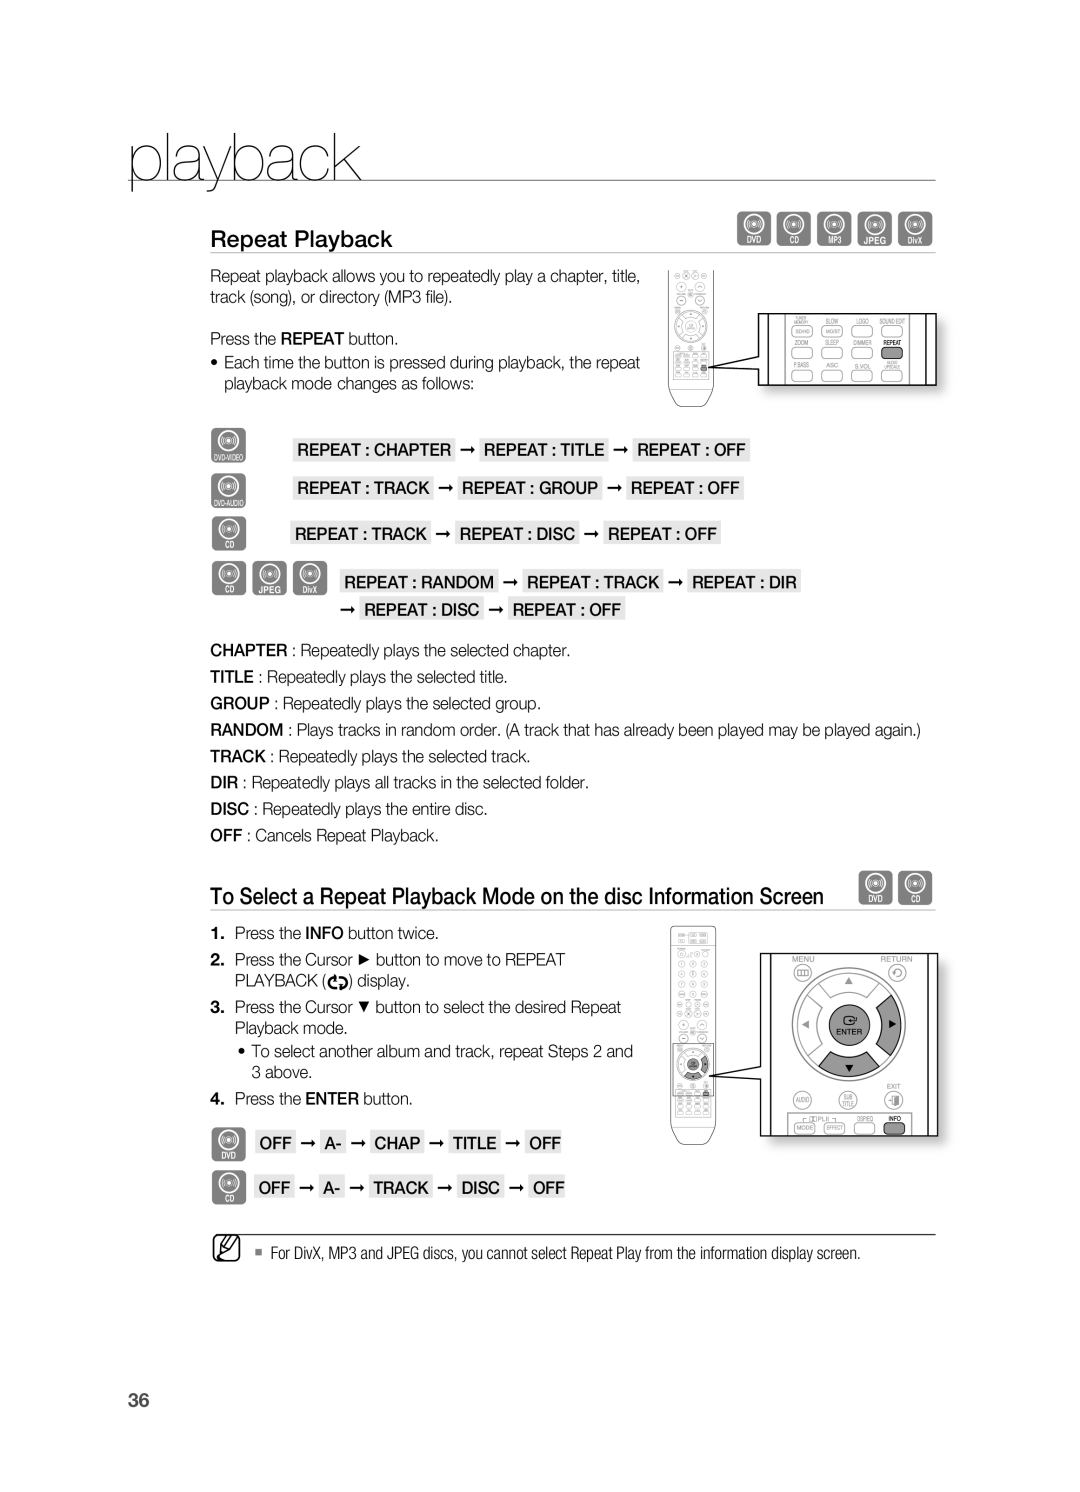 Samsung HT-TX715 user manual playback, Bagd, repeat Playback 